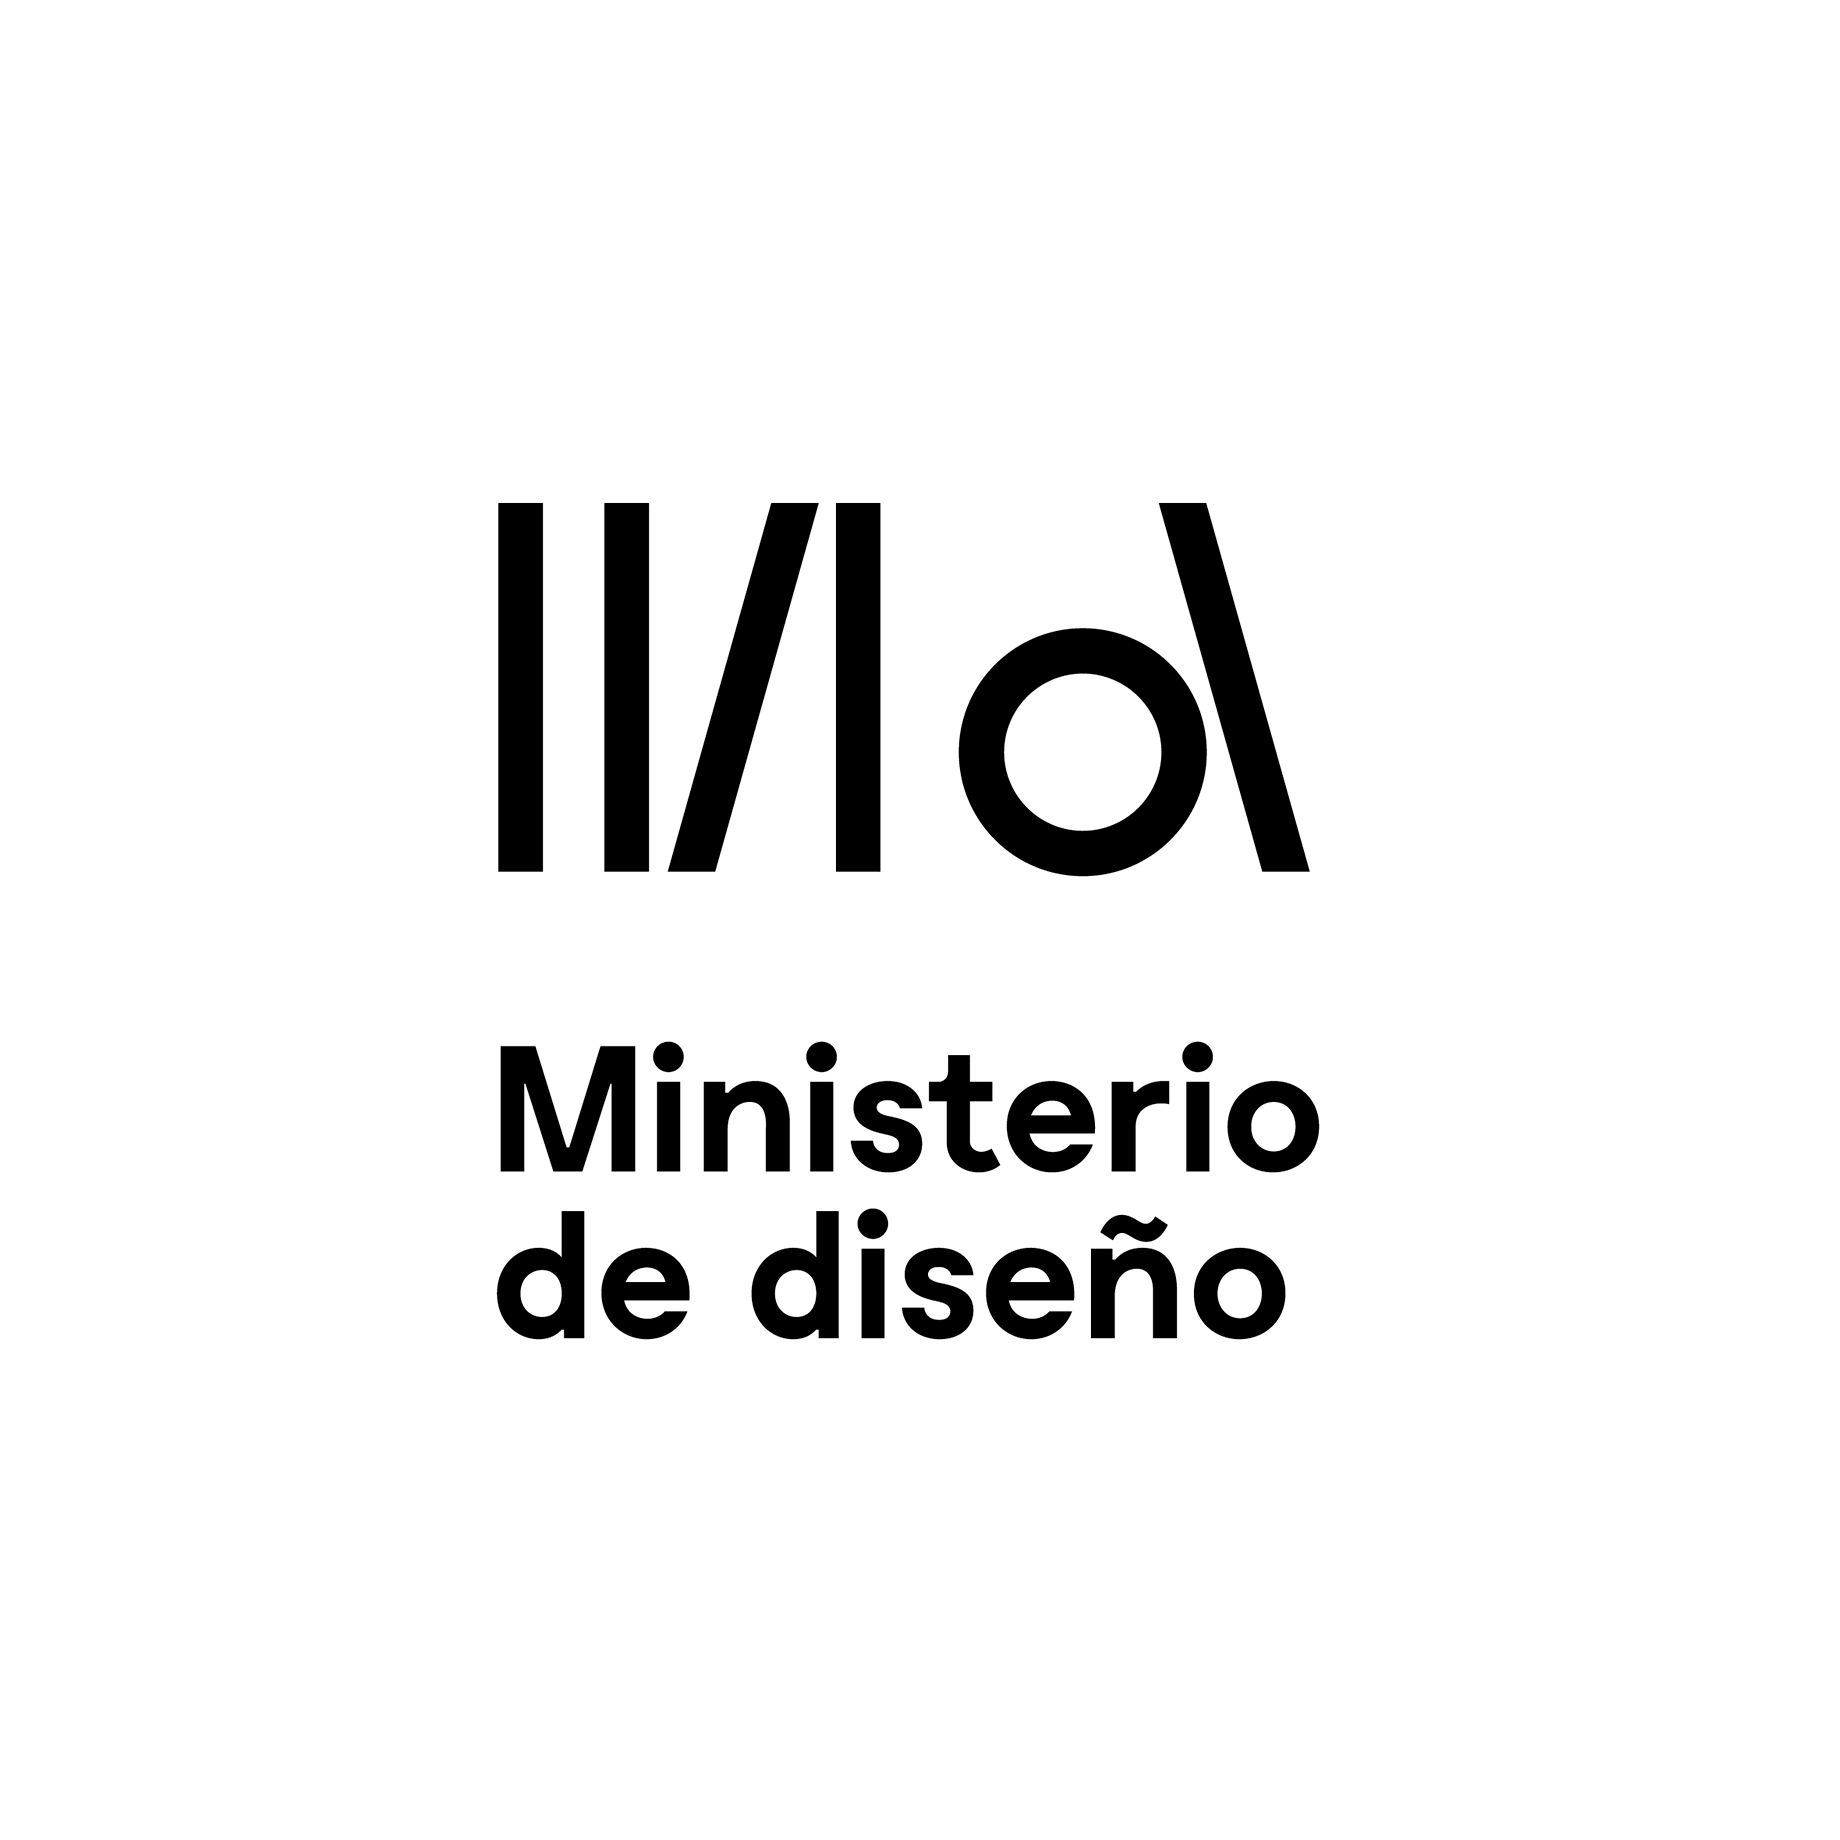 Identidad Ministerio de diseño / I+D